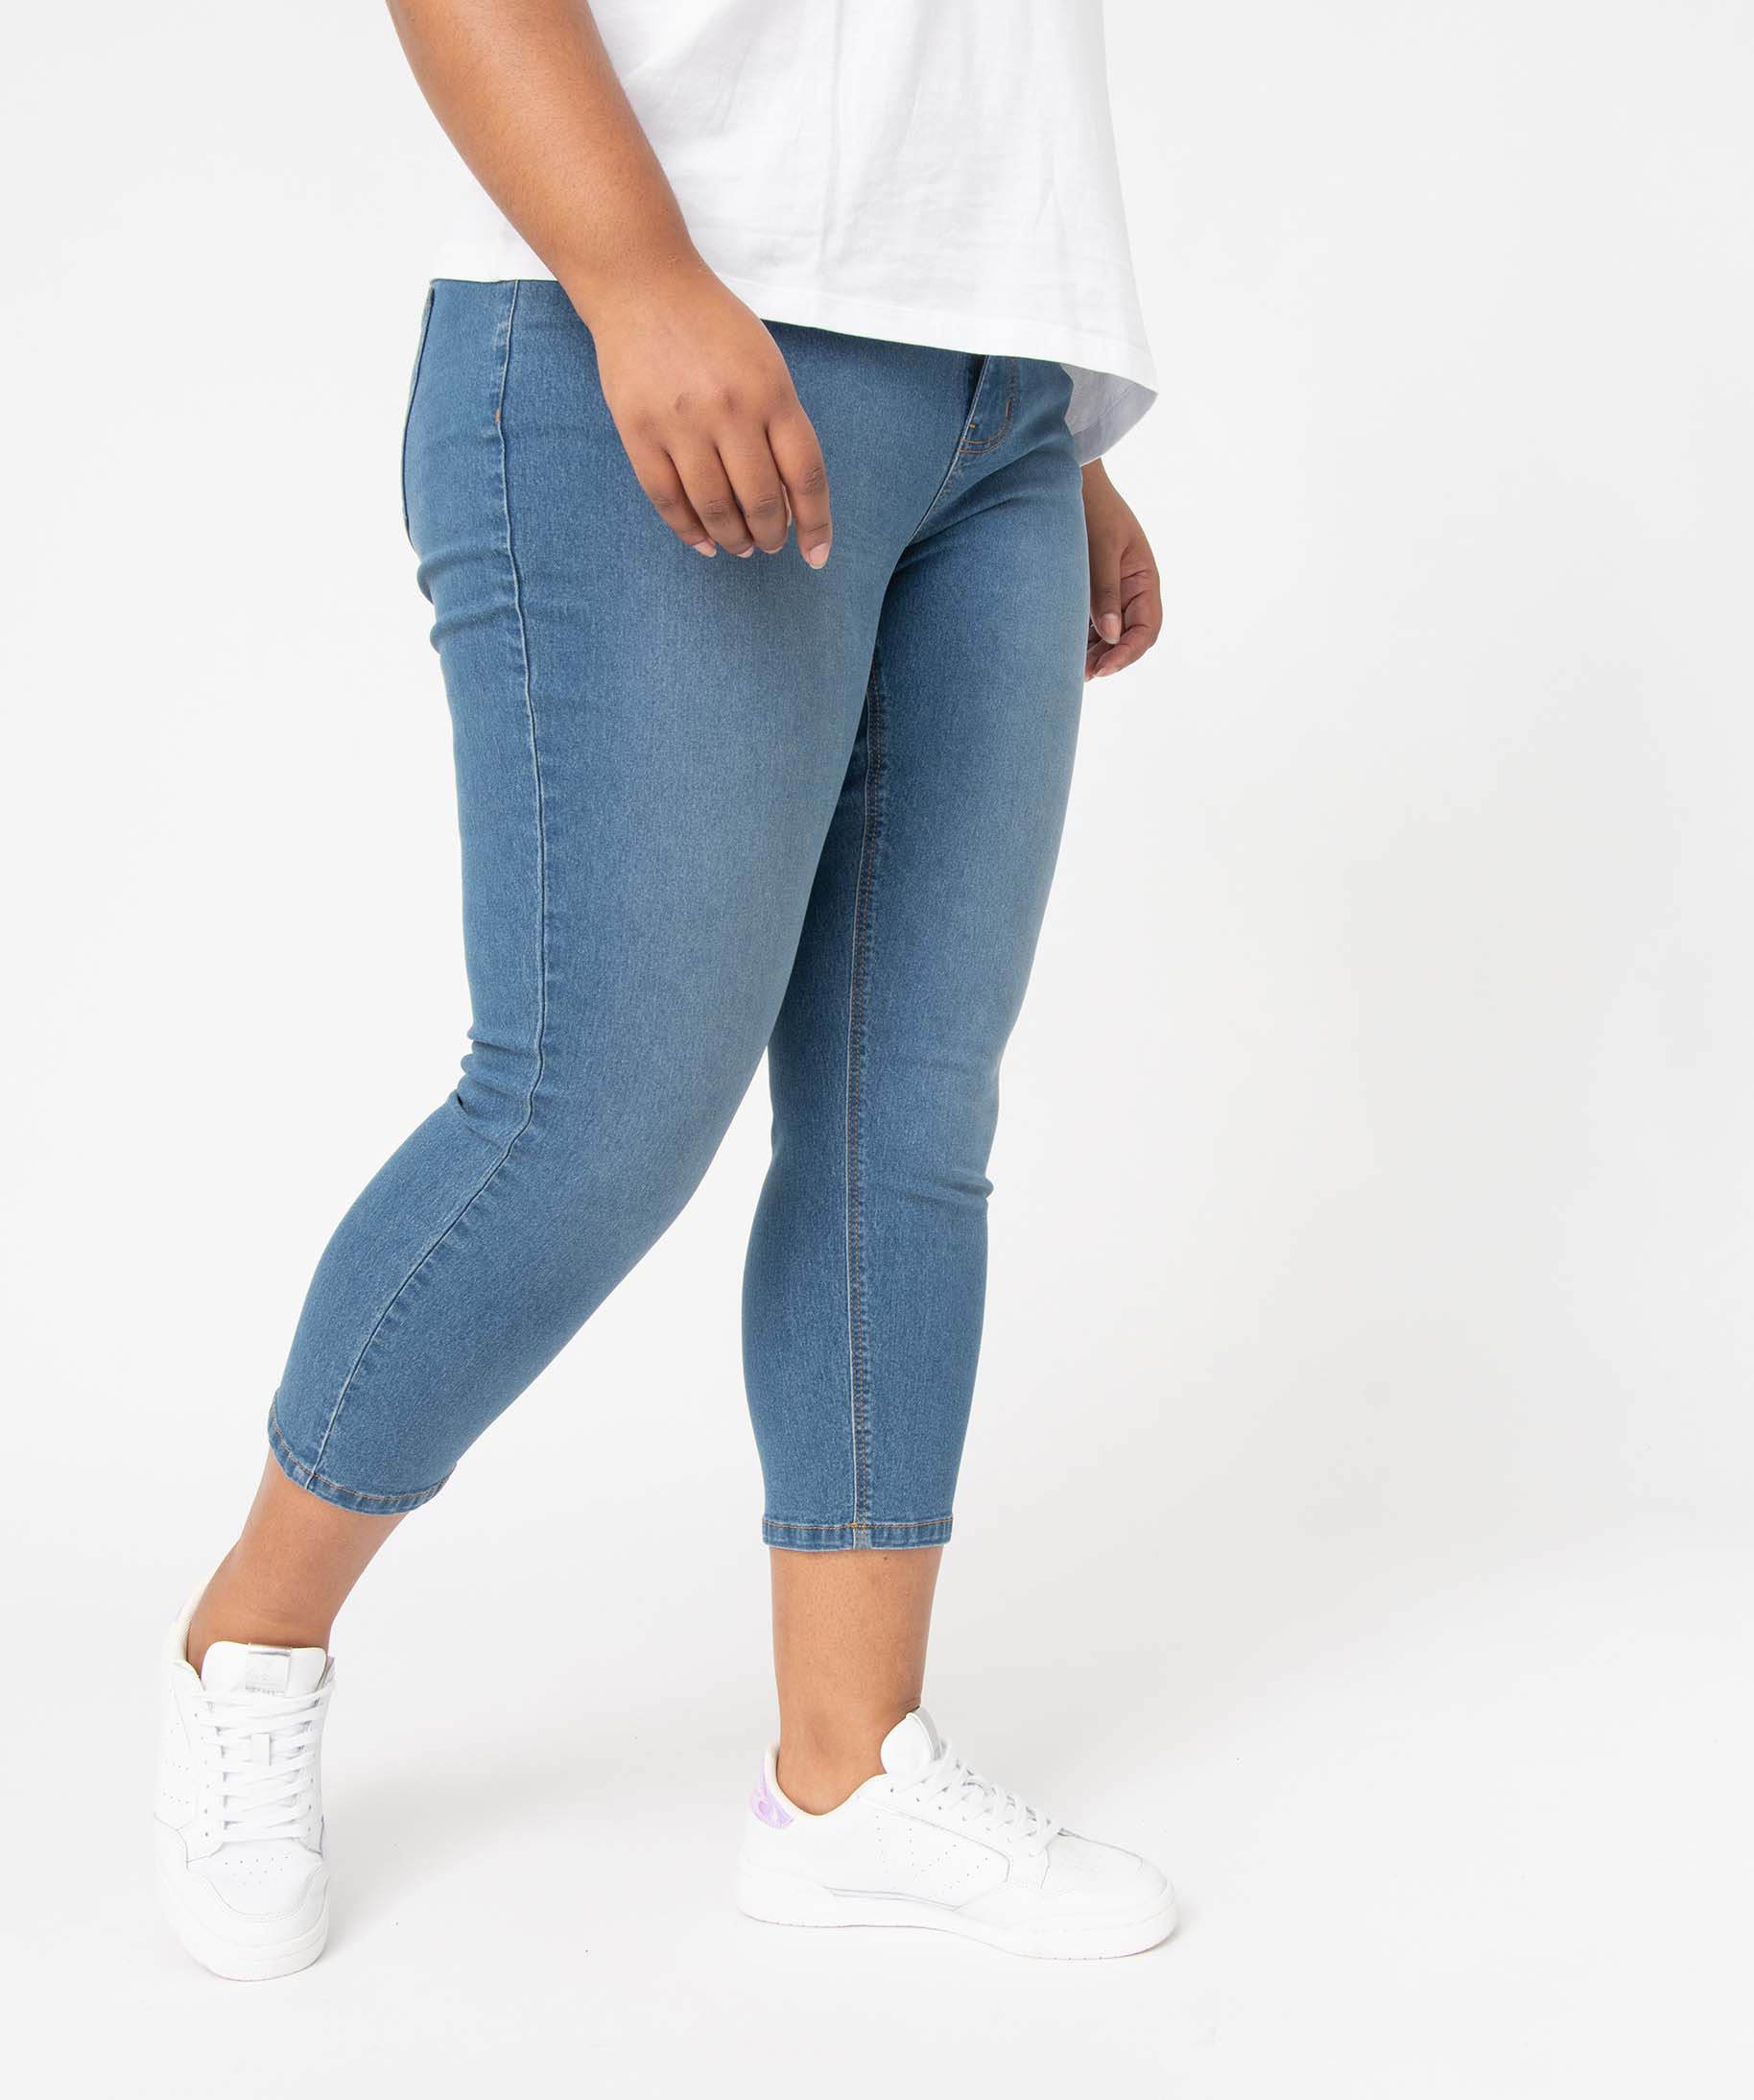 pantacourt en jean femme grande taille en denim stretch gris pantacourts